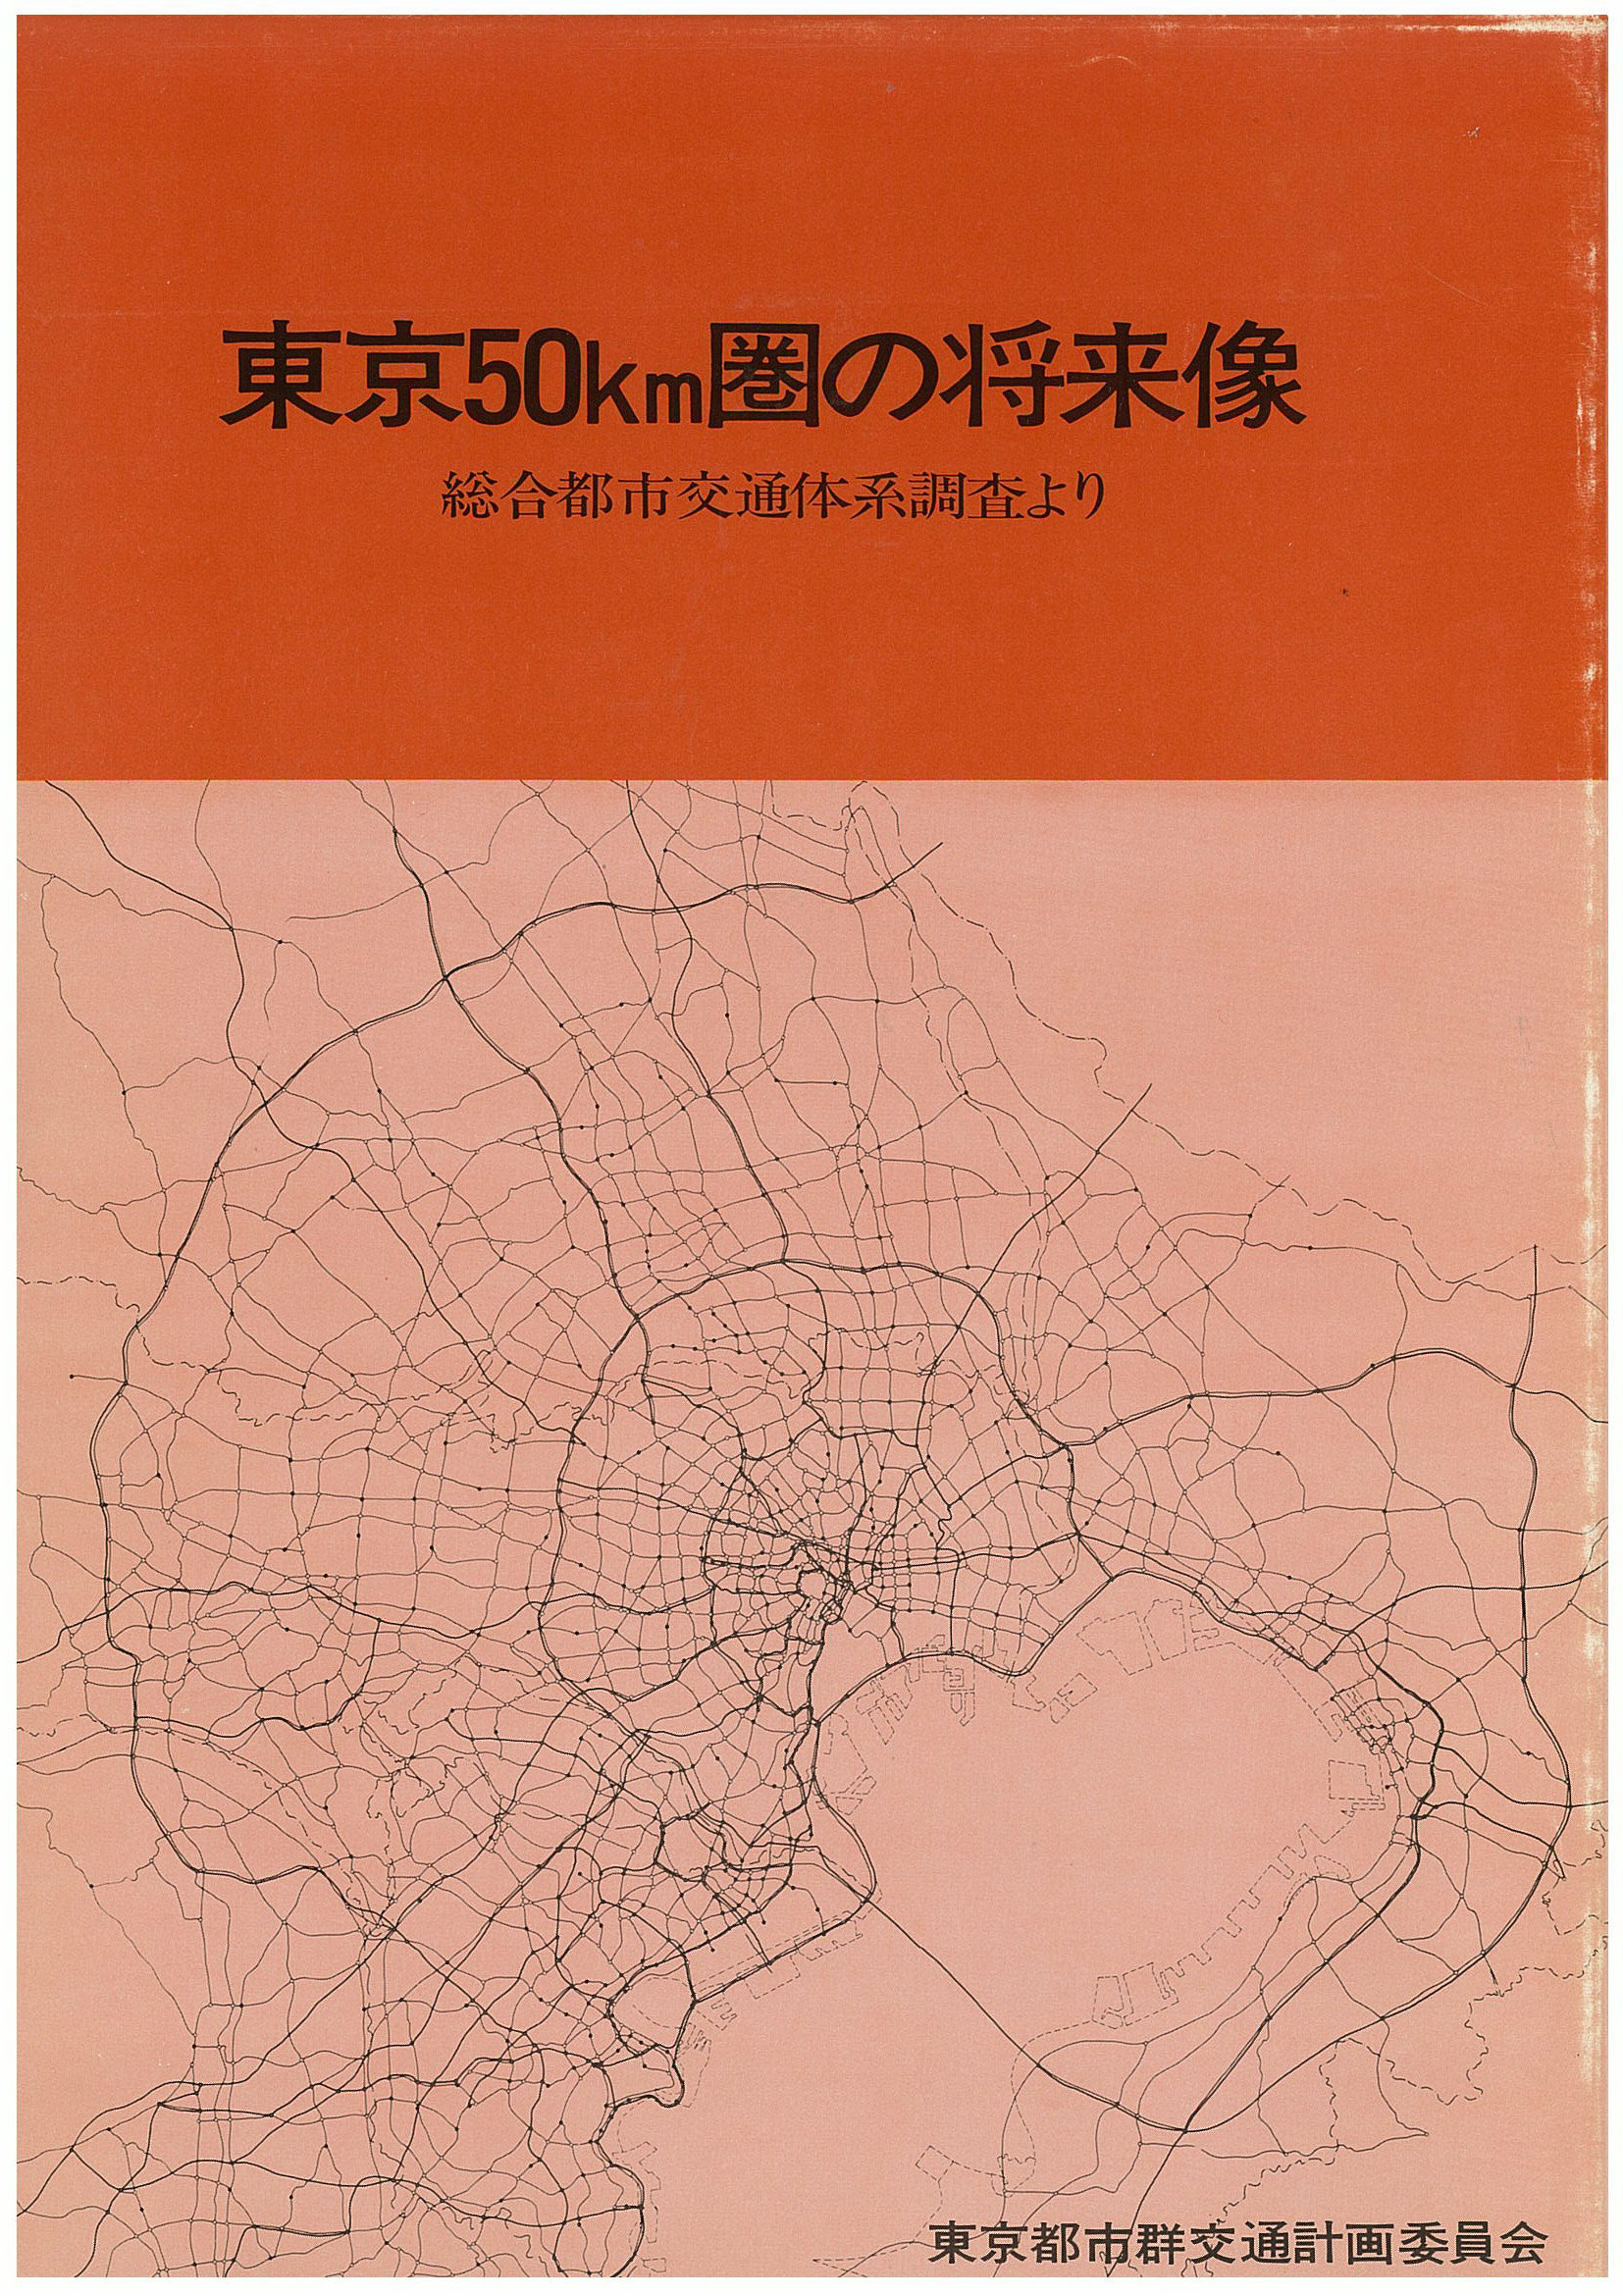 東京50km圏の将来像：総合都市交通体系調査より